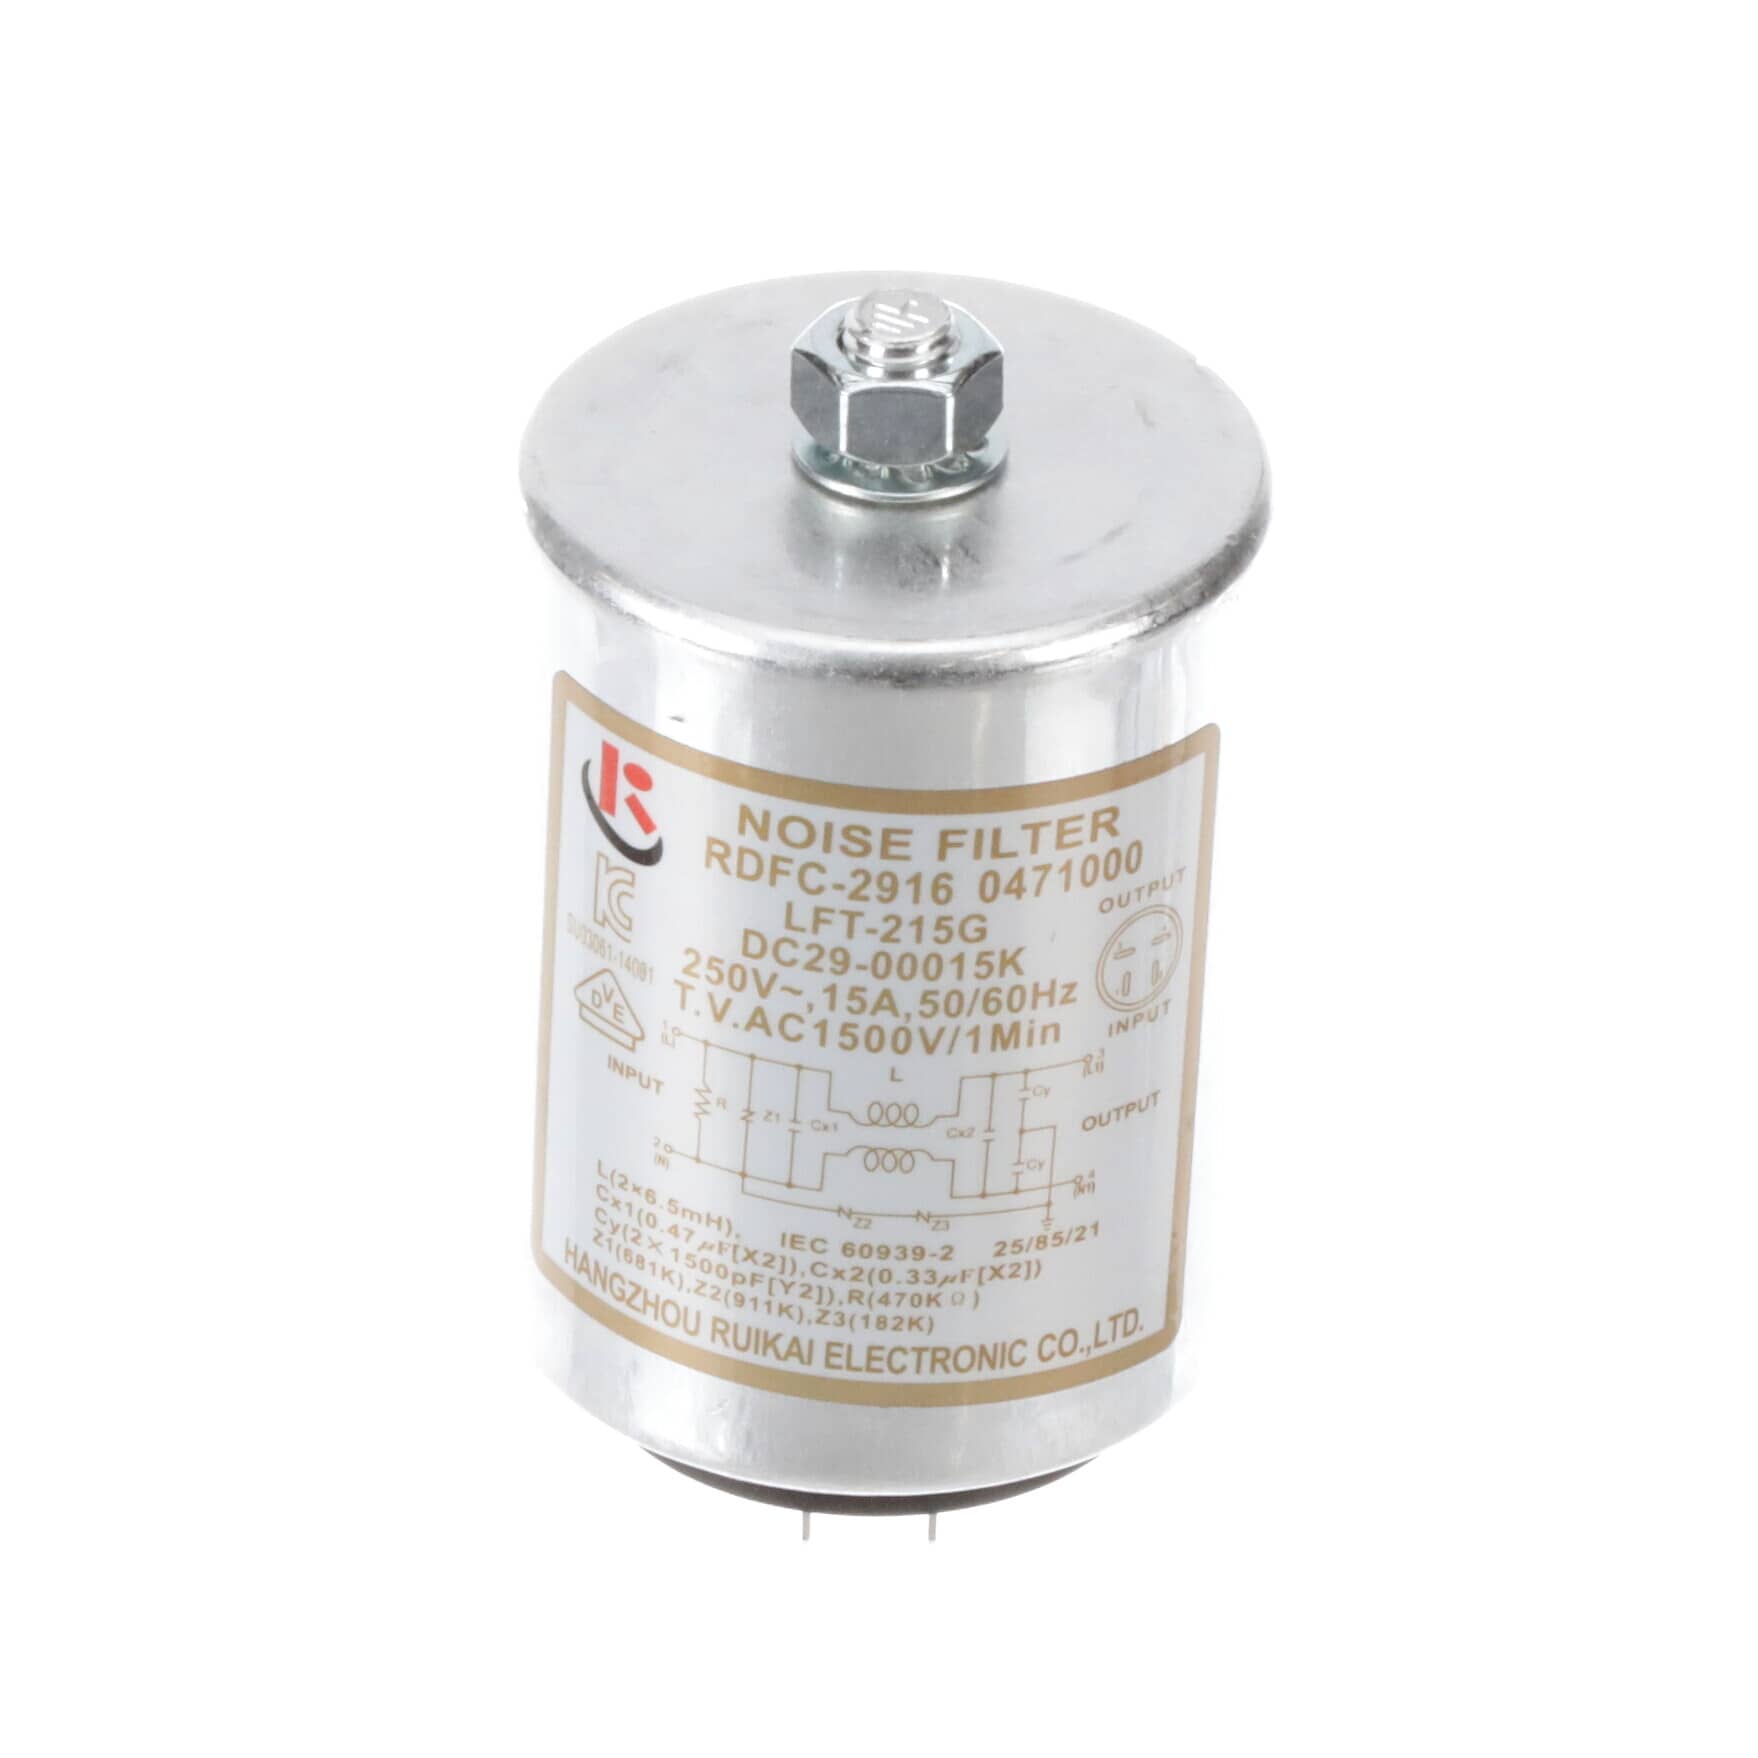 DC29-00015K Filter Emi - Samsung Parts USA